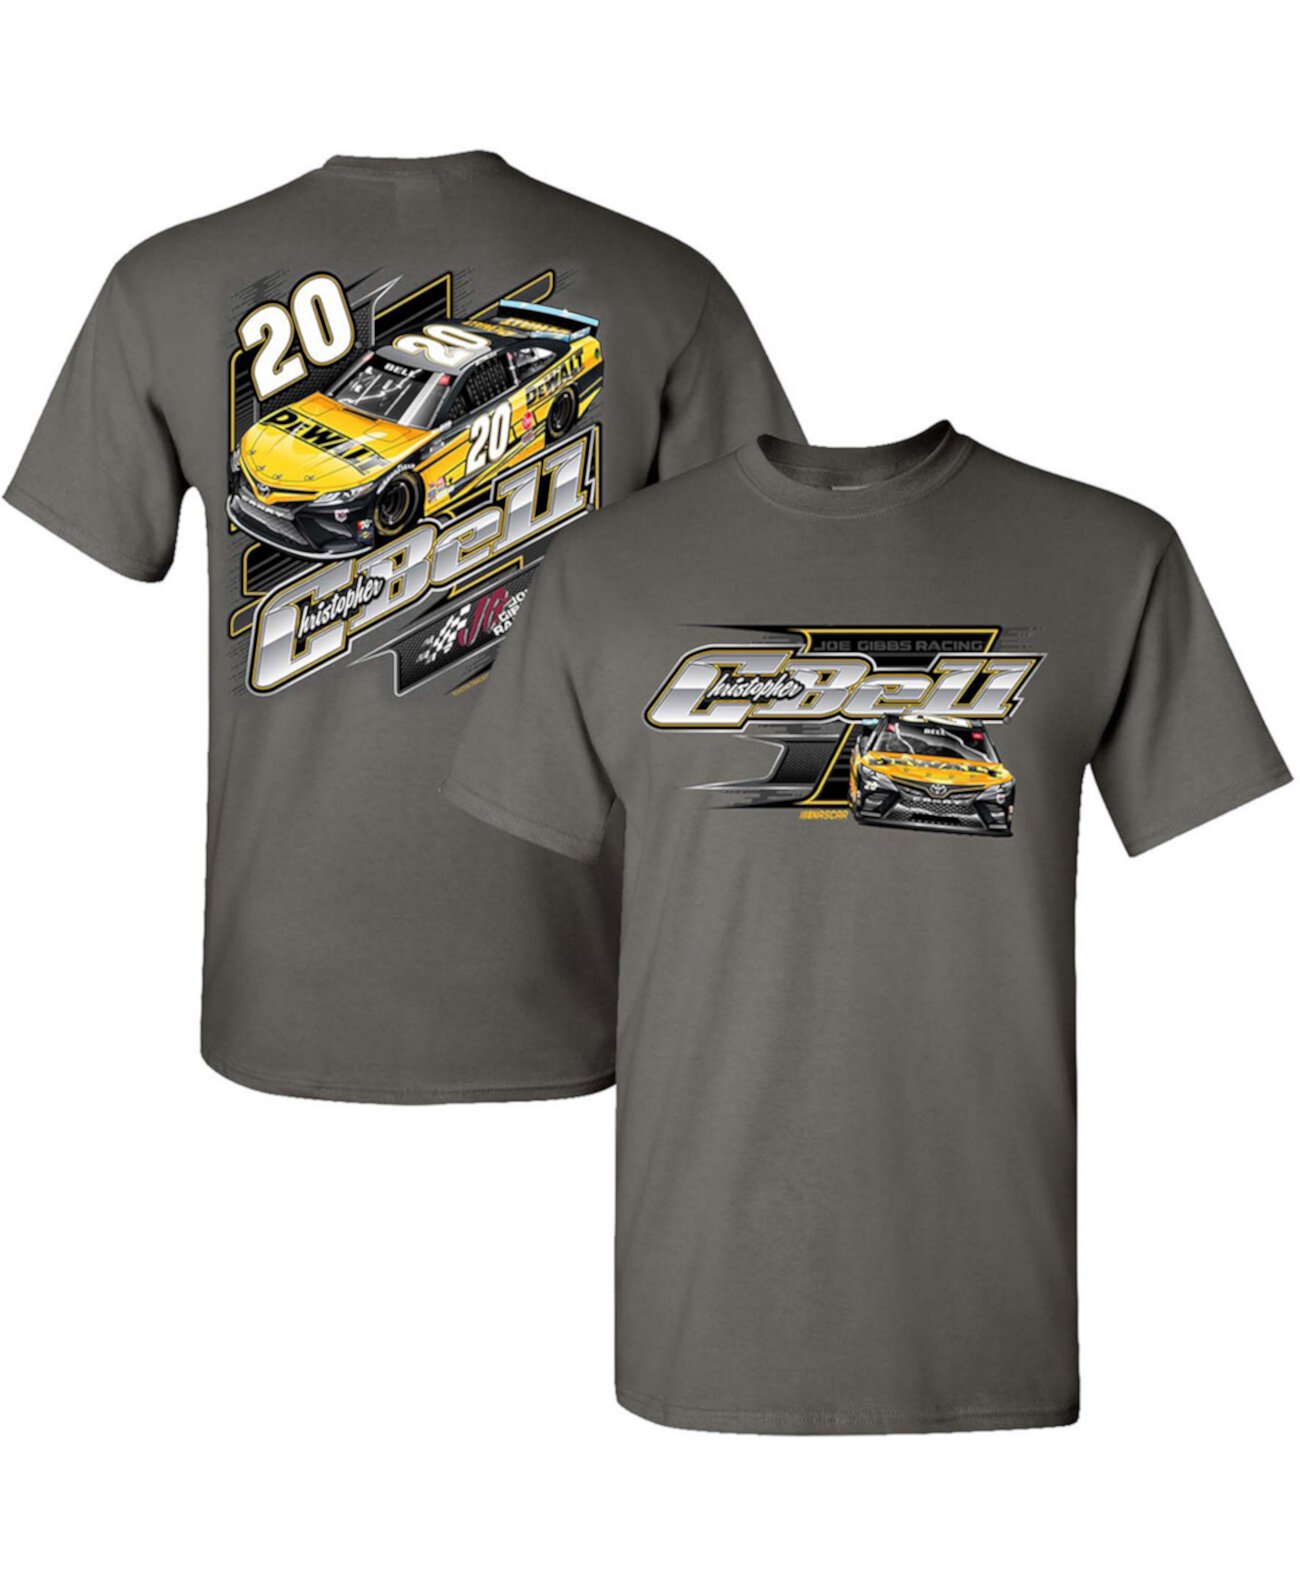 Мужская темно-серая футболка Christopher Bell Car 2-Spot Joe Gibbs Racing Team Collection